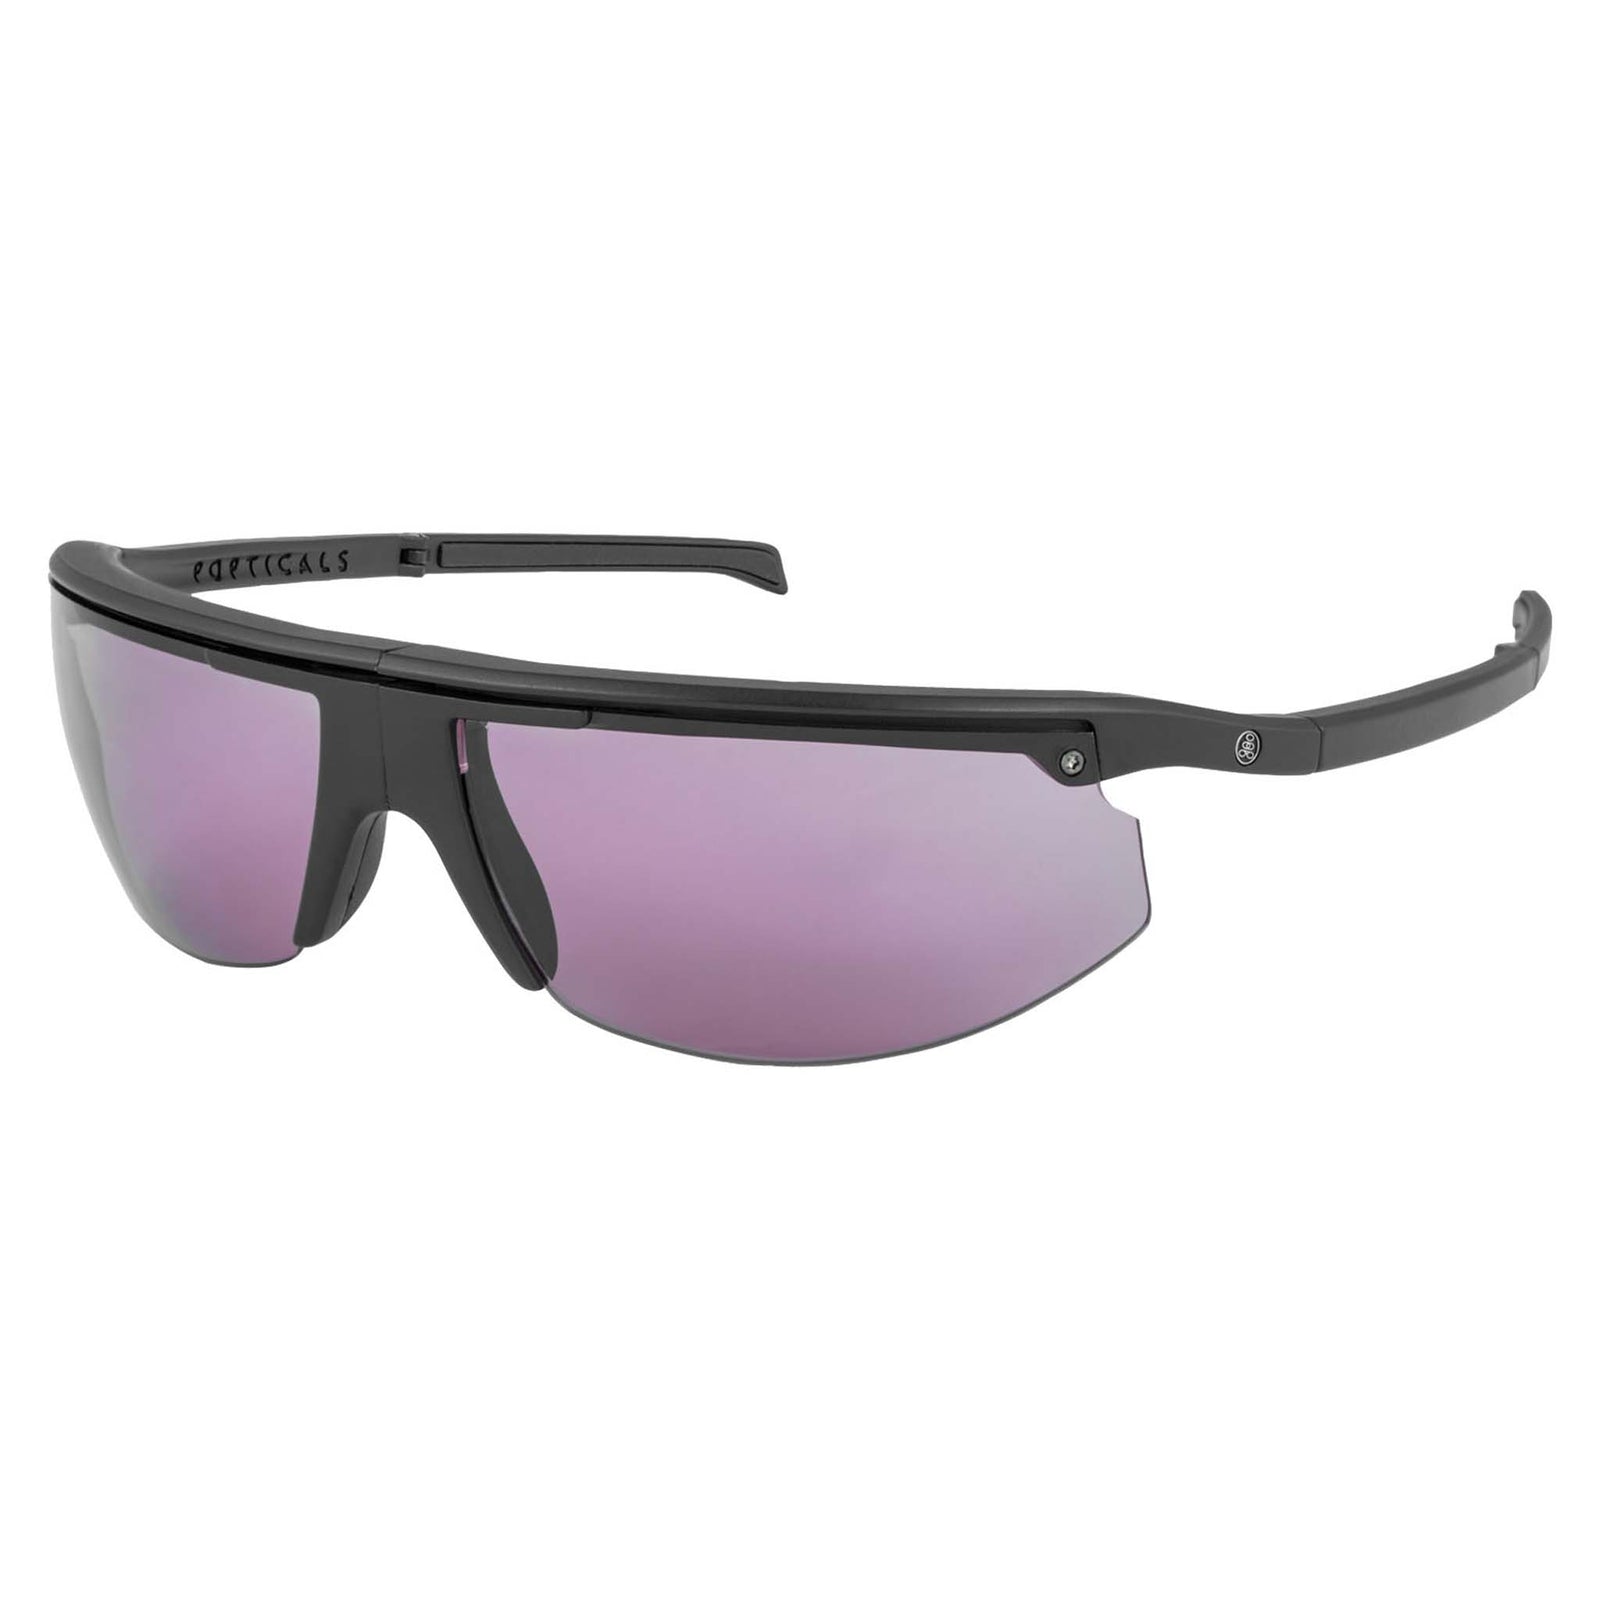 Popticals, Premium Compact Sunglasses, PopStar, 200040-BMVS, Standard Golf Sunglasses, Matte Black Frame, Violet Golf Lenses, Glam View